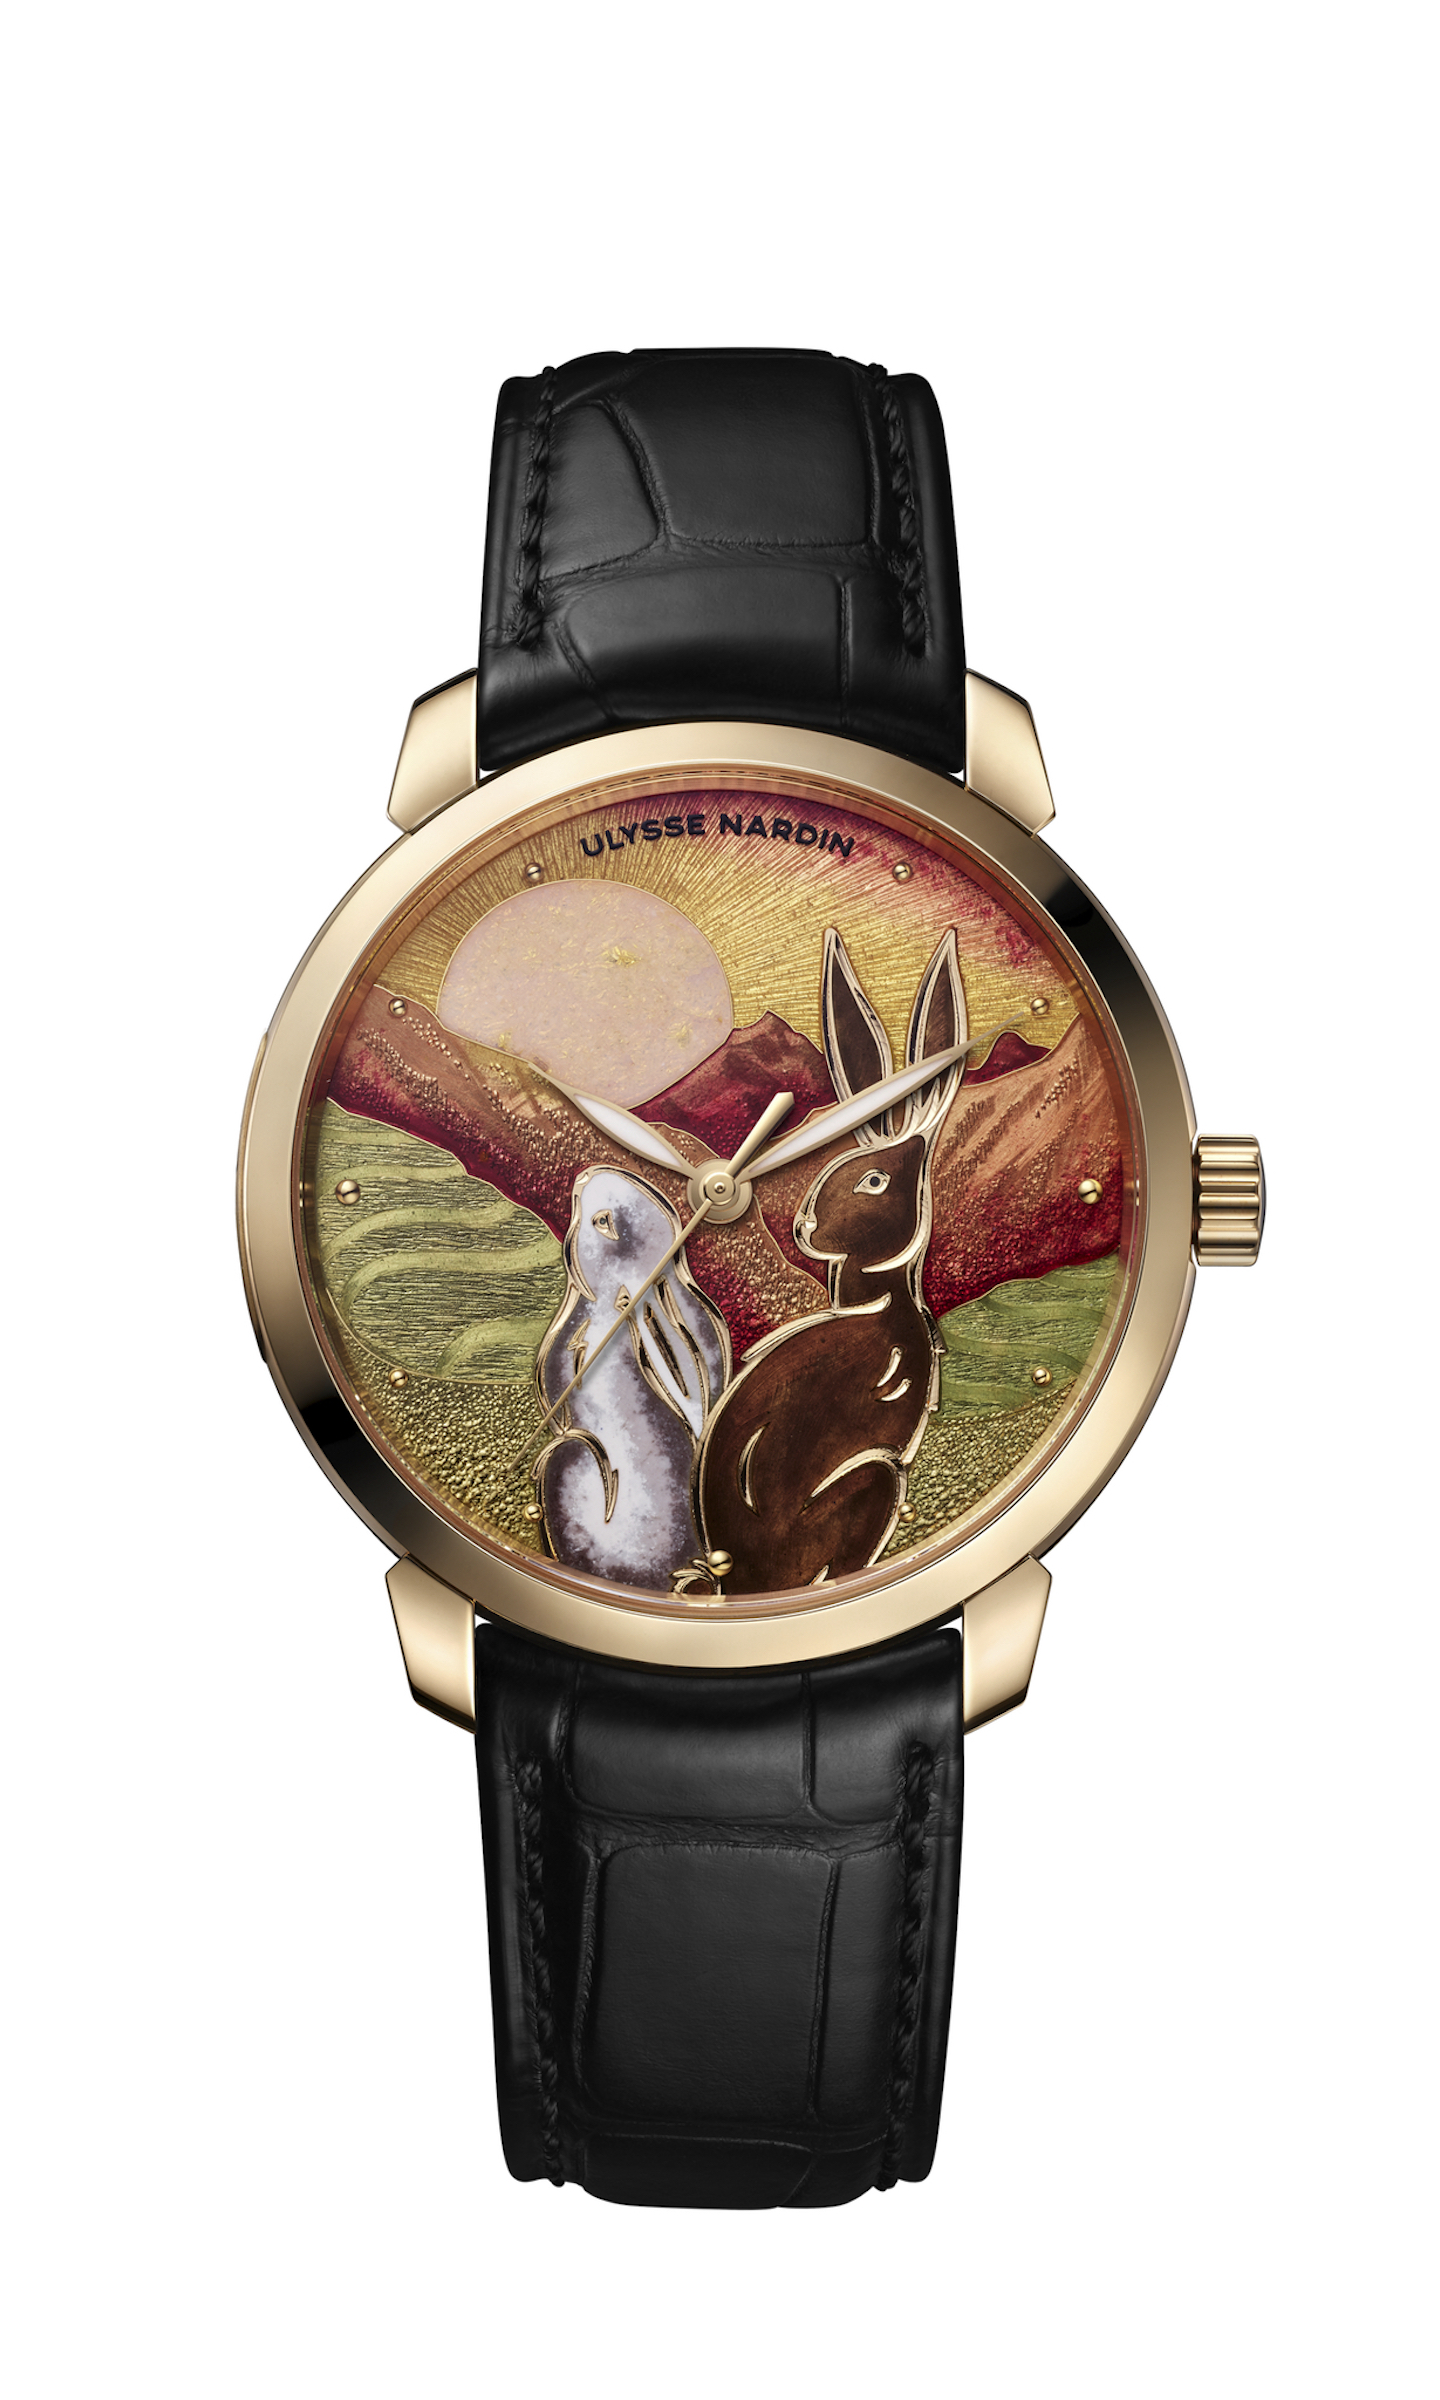 Ulysse Nardin Classico Year of the Rabbit watch